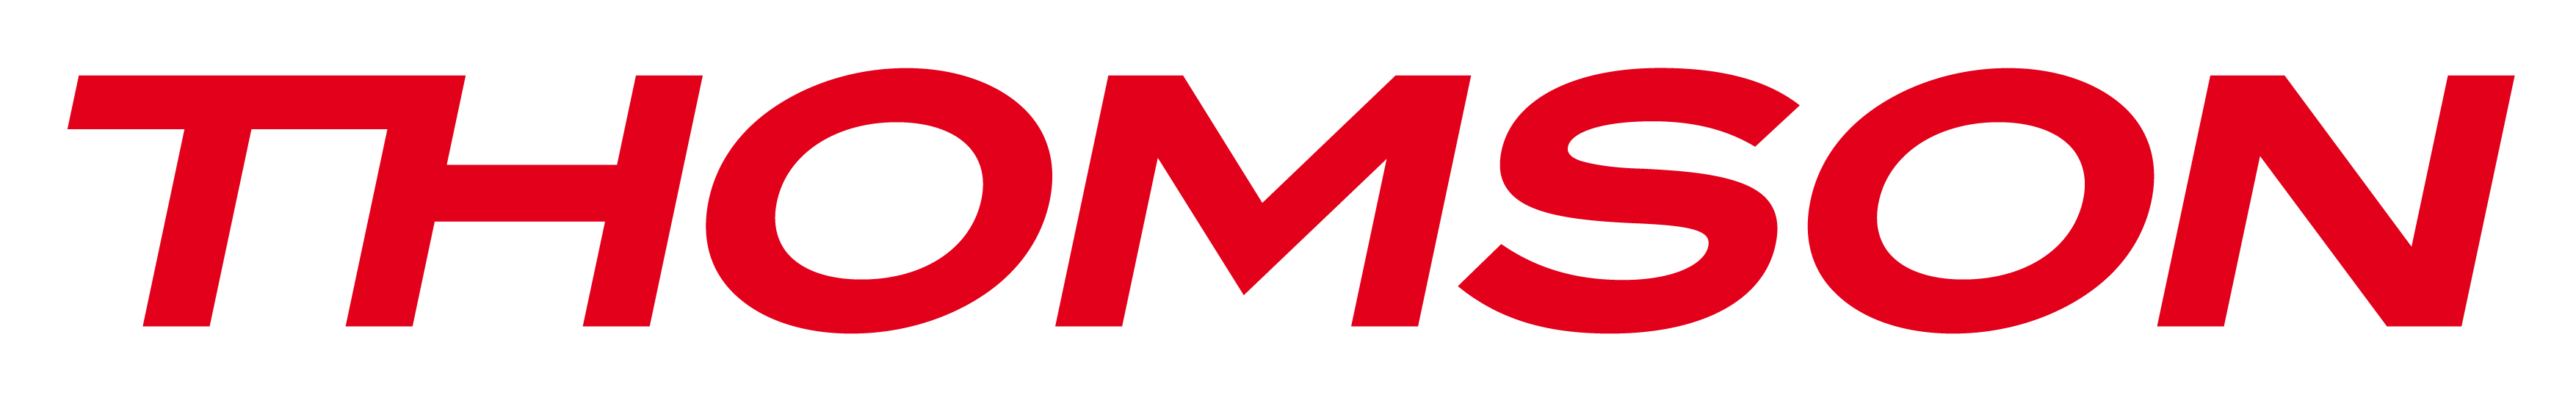 logo thomson rouge sur blanc